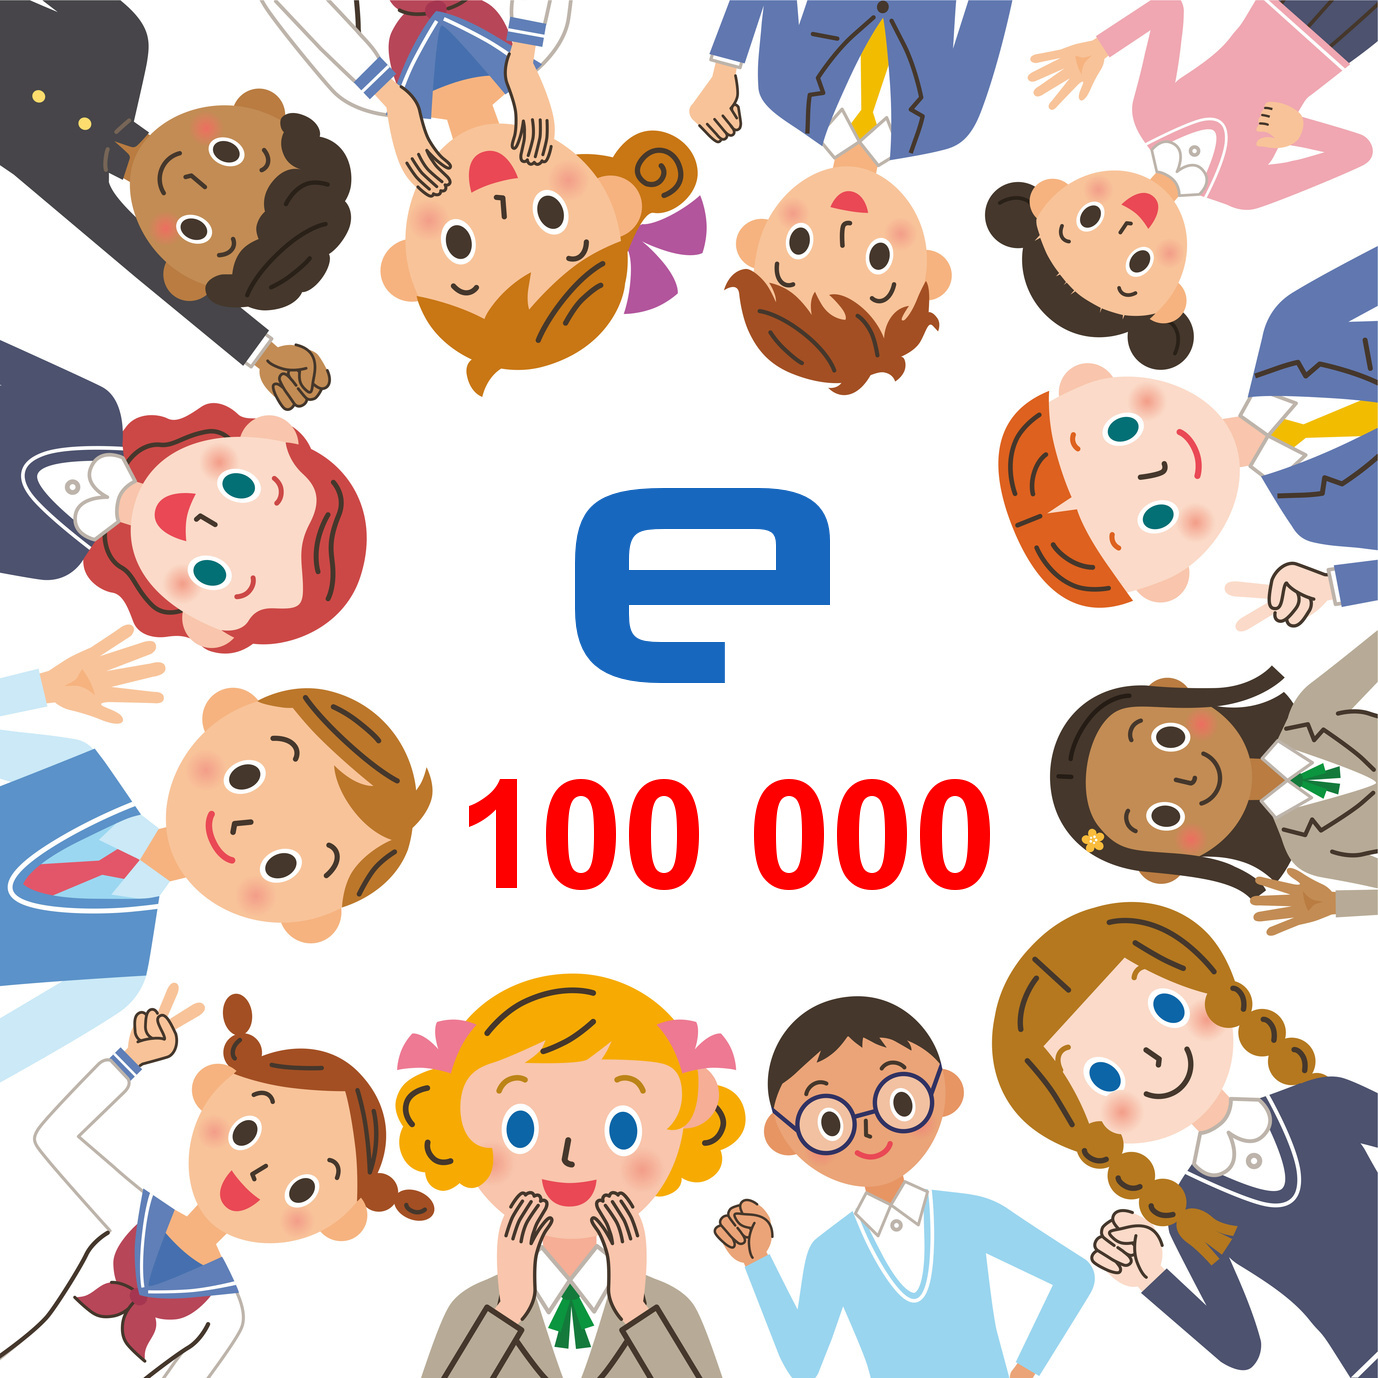 100,000 users